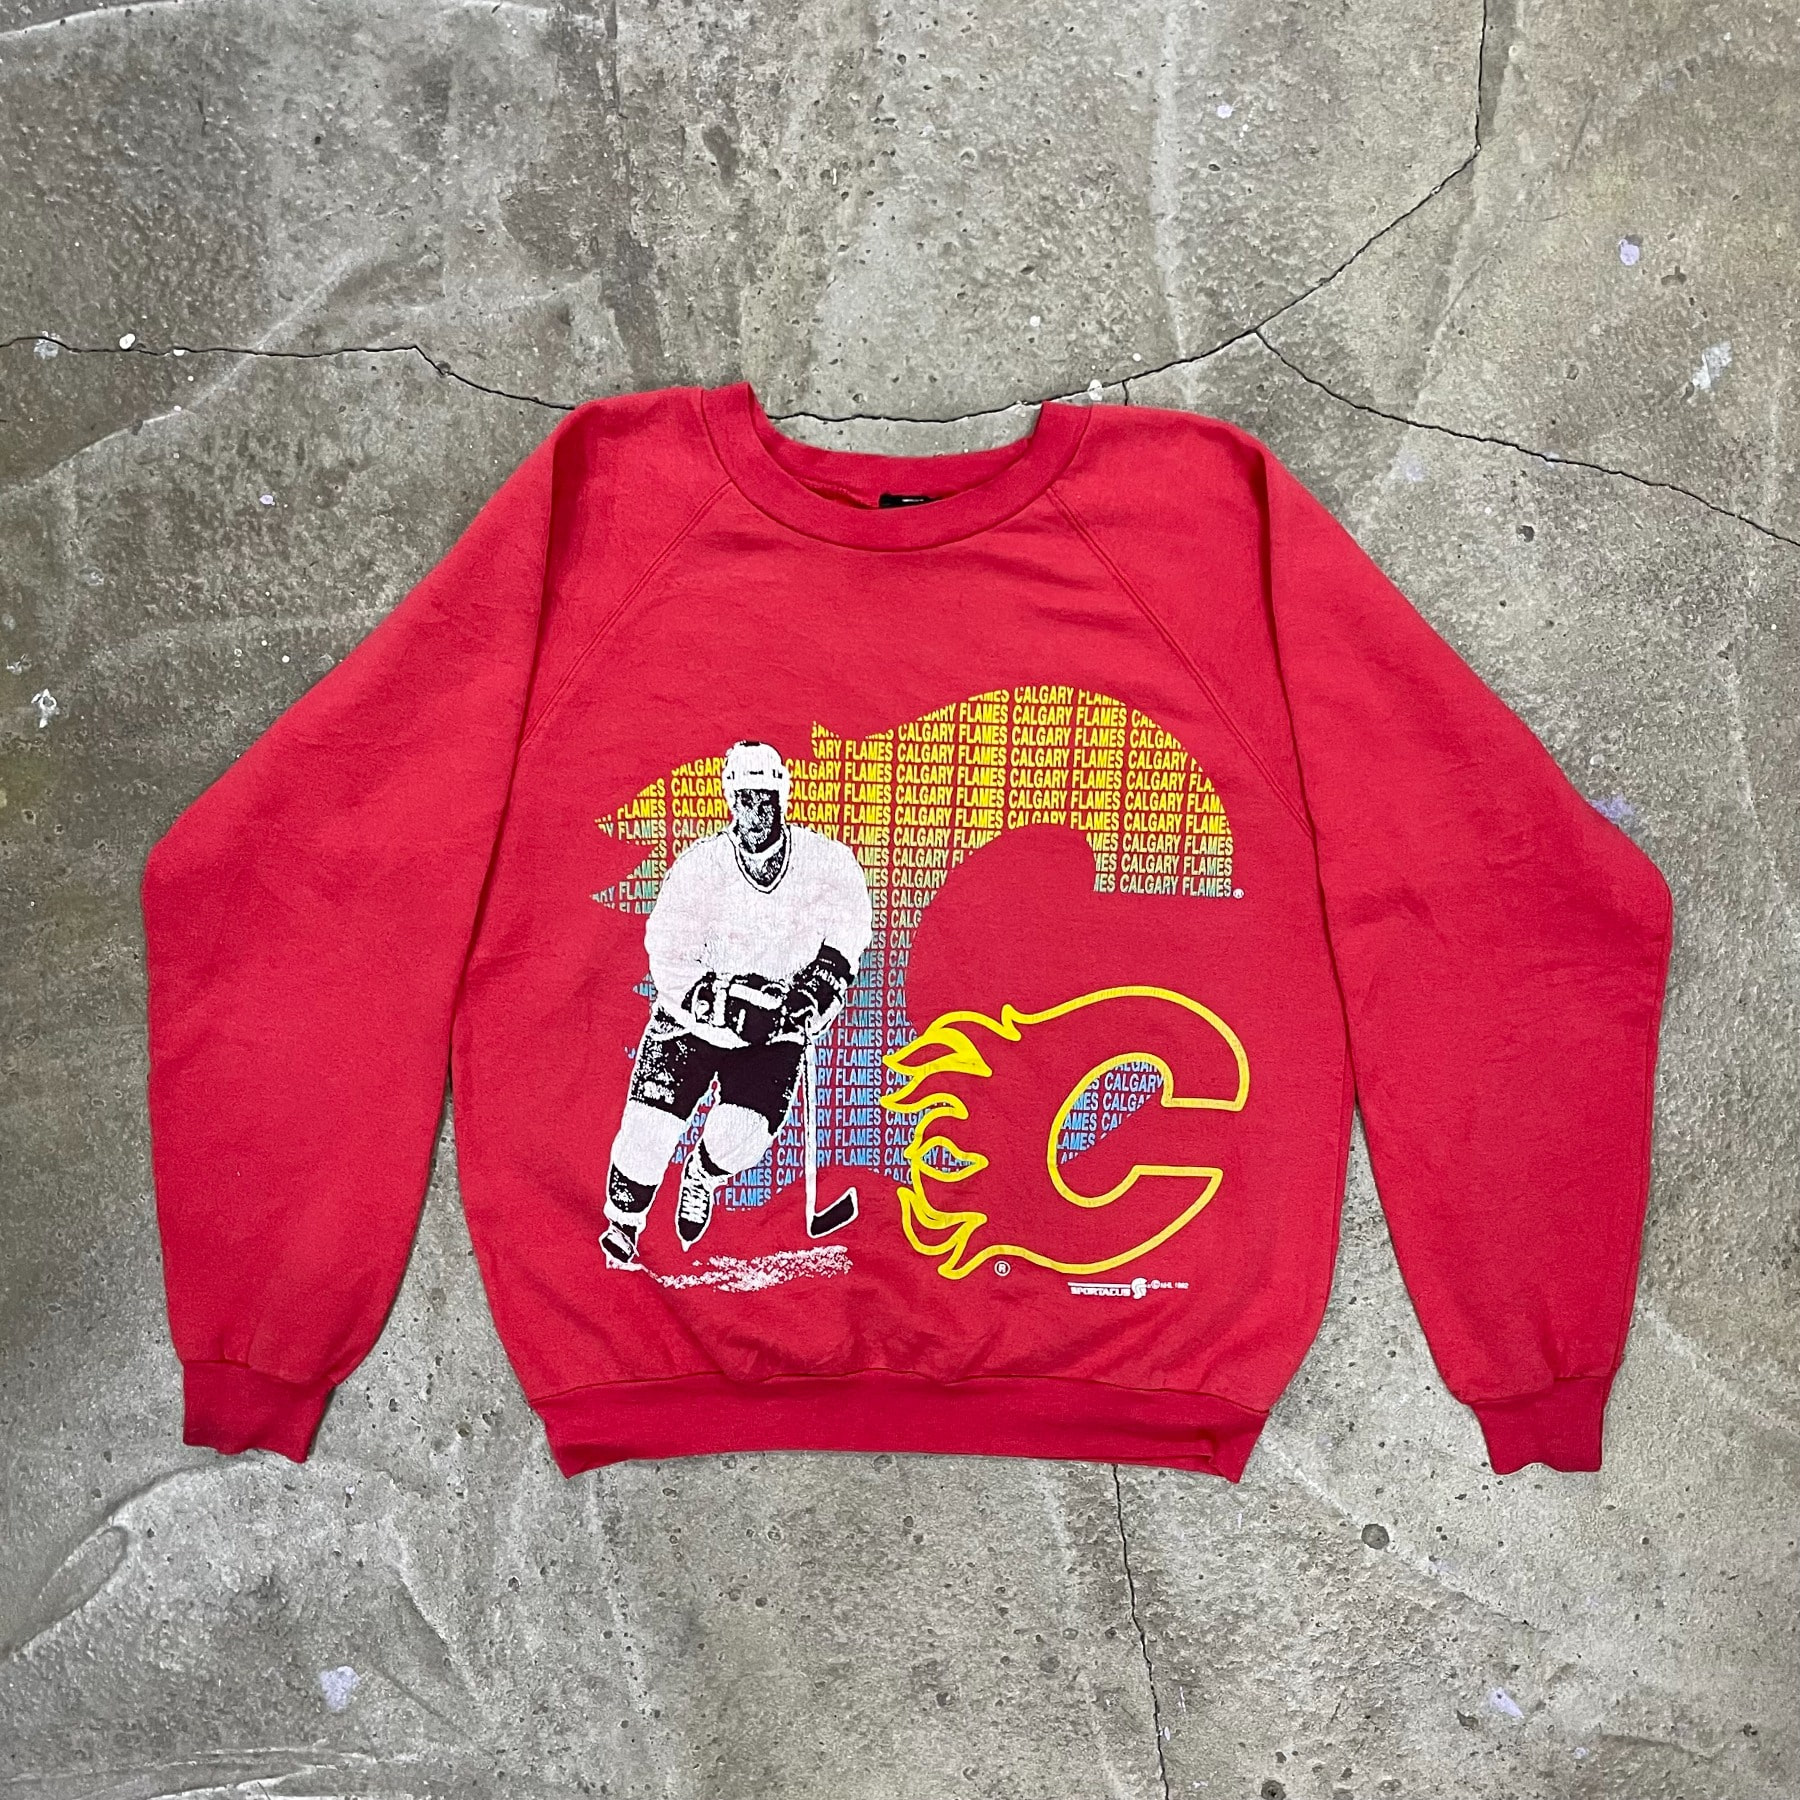 1992 Calgary Flames Sweatshirt (Made in CANADA) - M